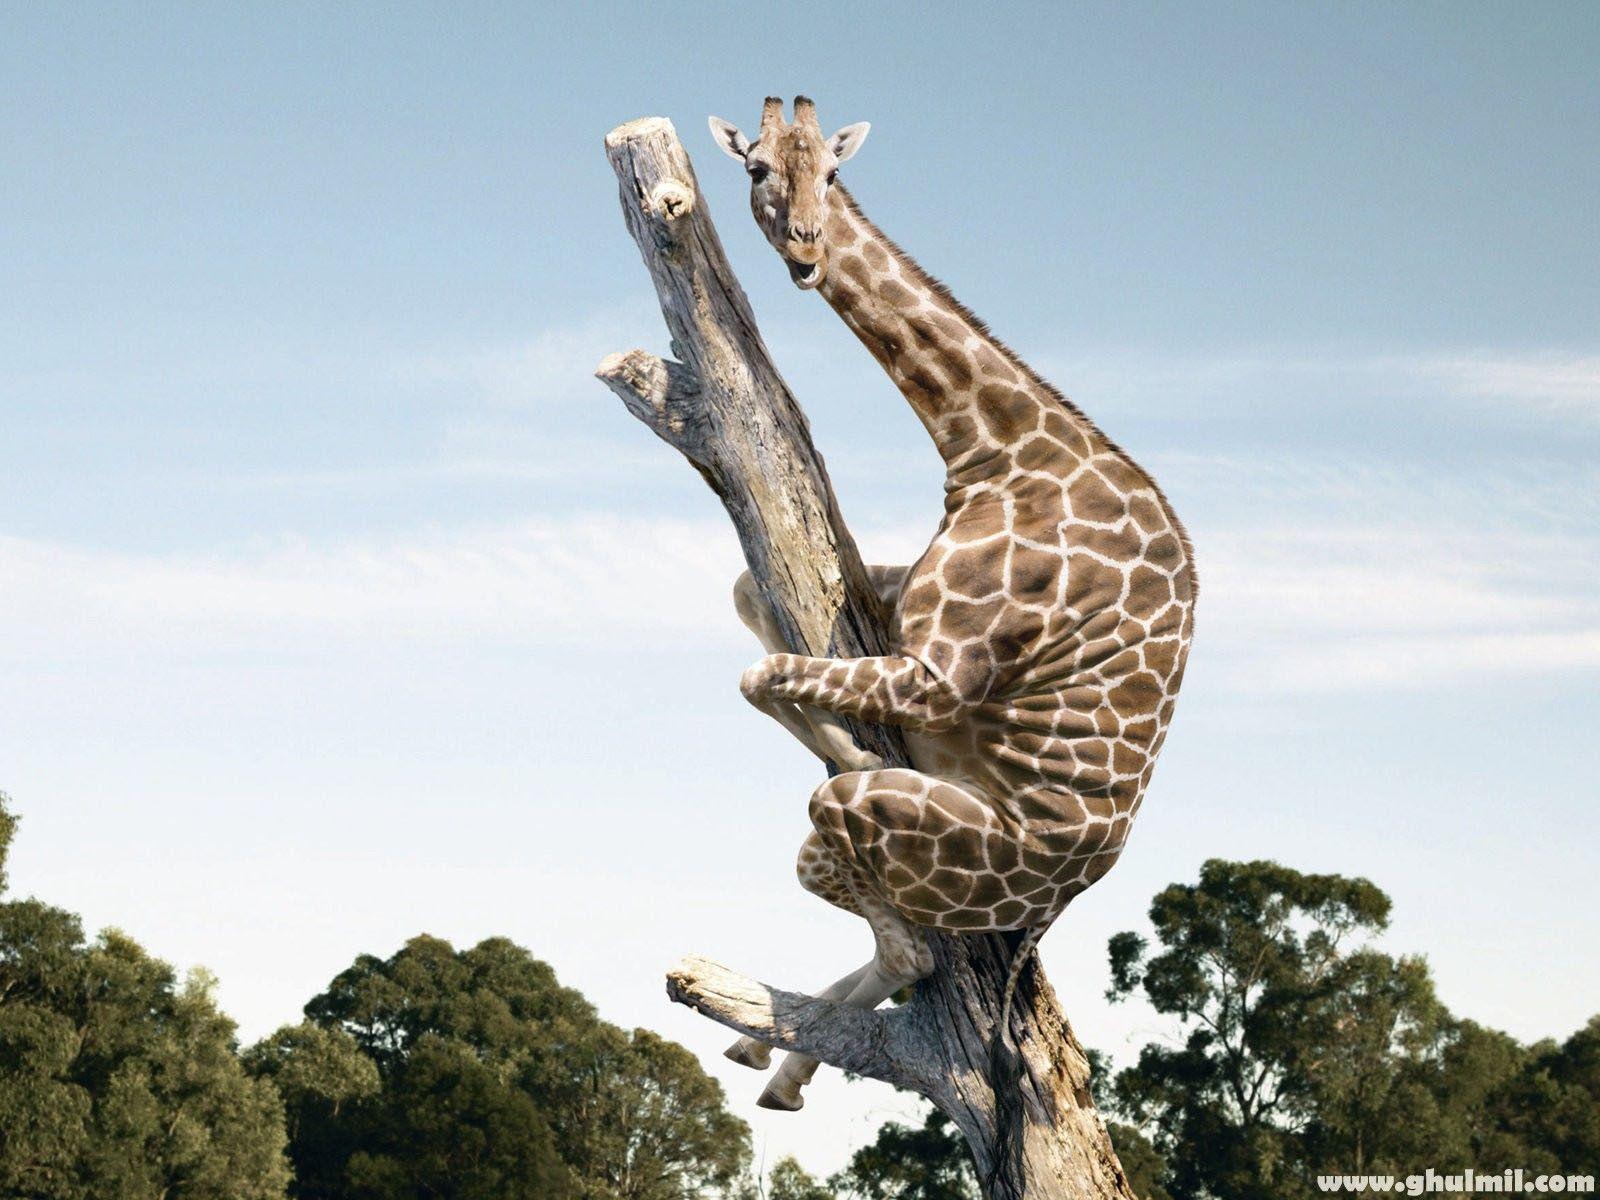 giraffe climbed up the tree amazing wallpaper for Desktop Windows